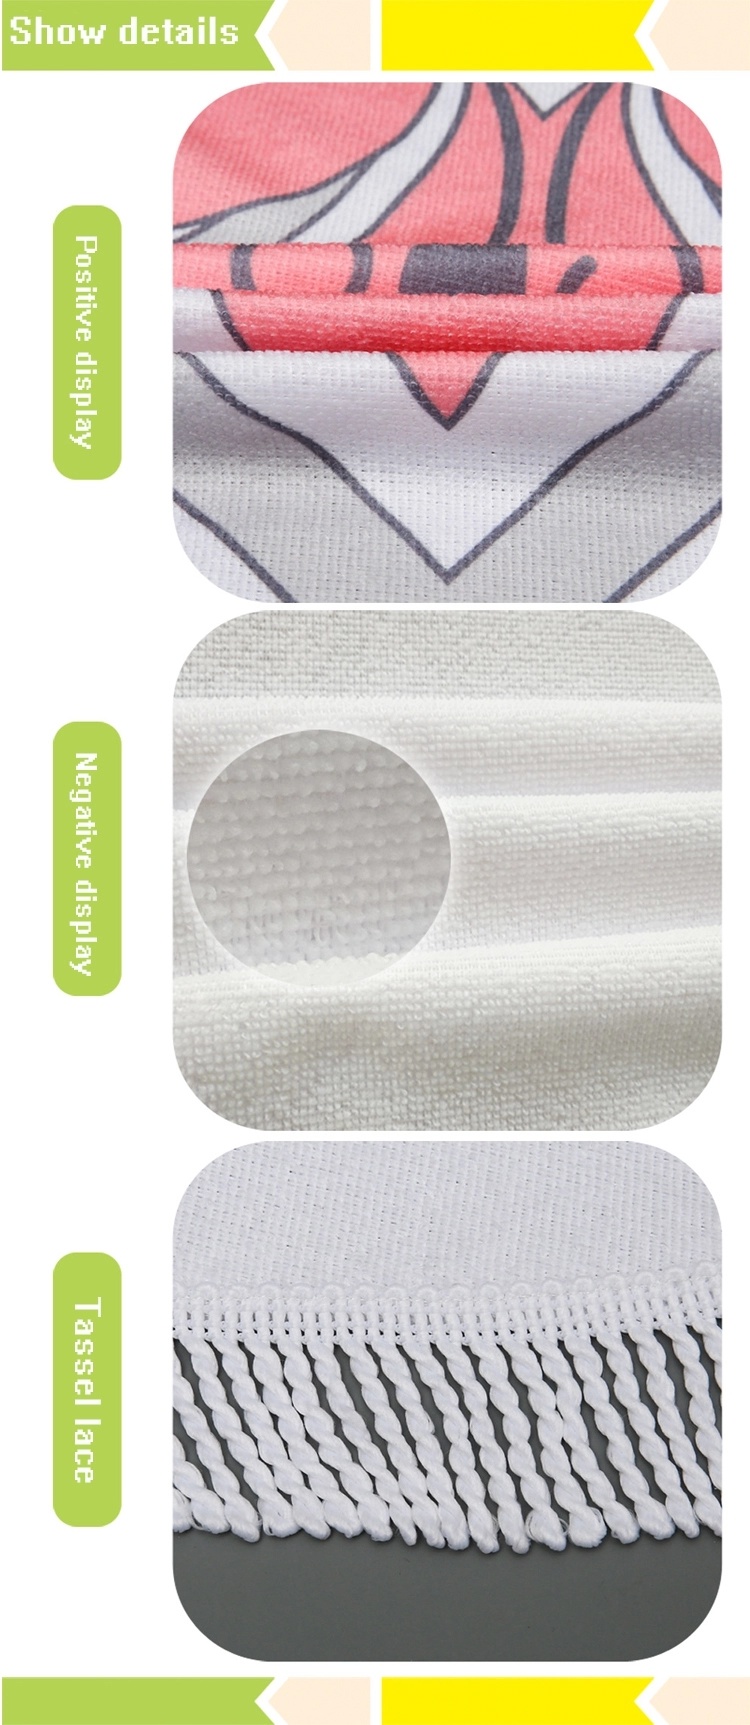 Custom Boho Printed Tassel Fouta Round Mandala Microfiber Beach Towel